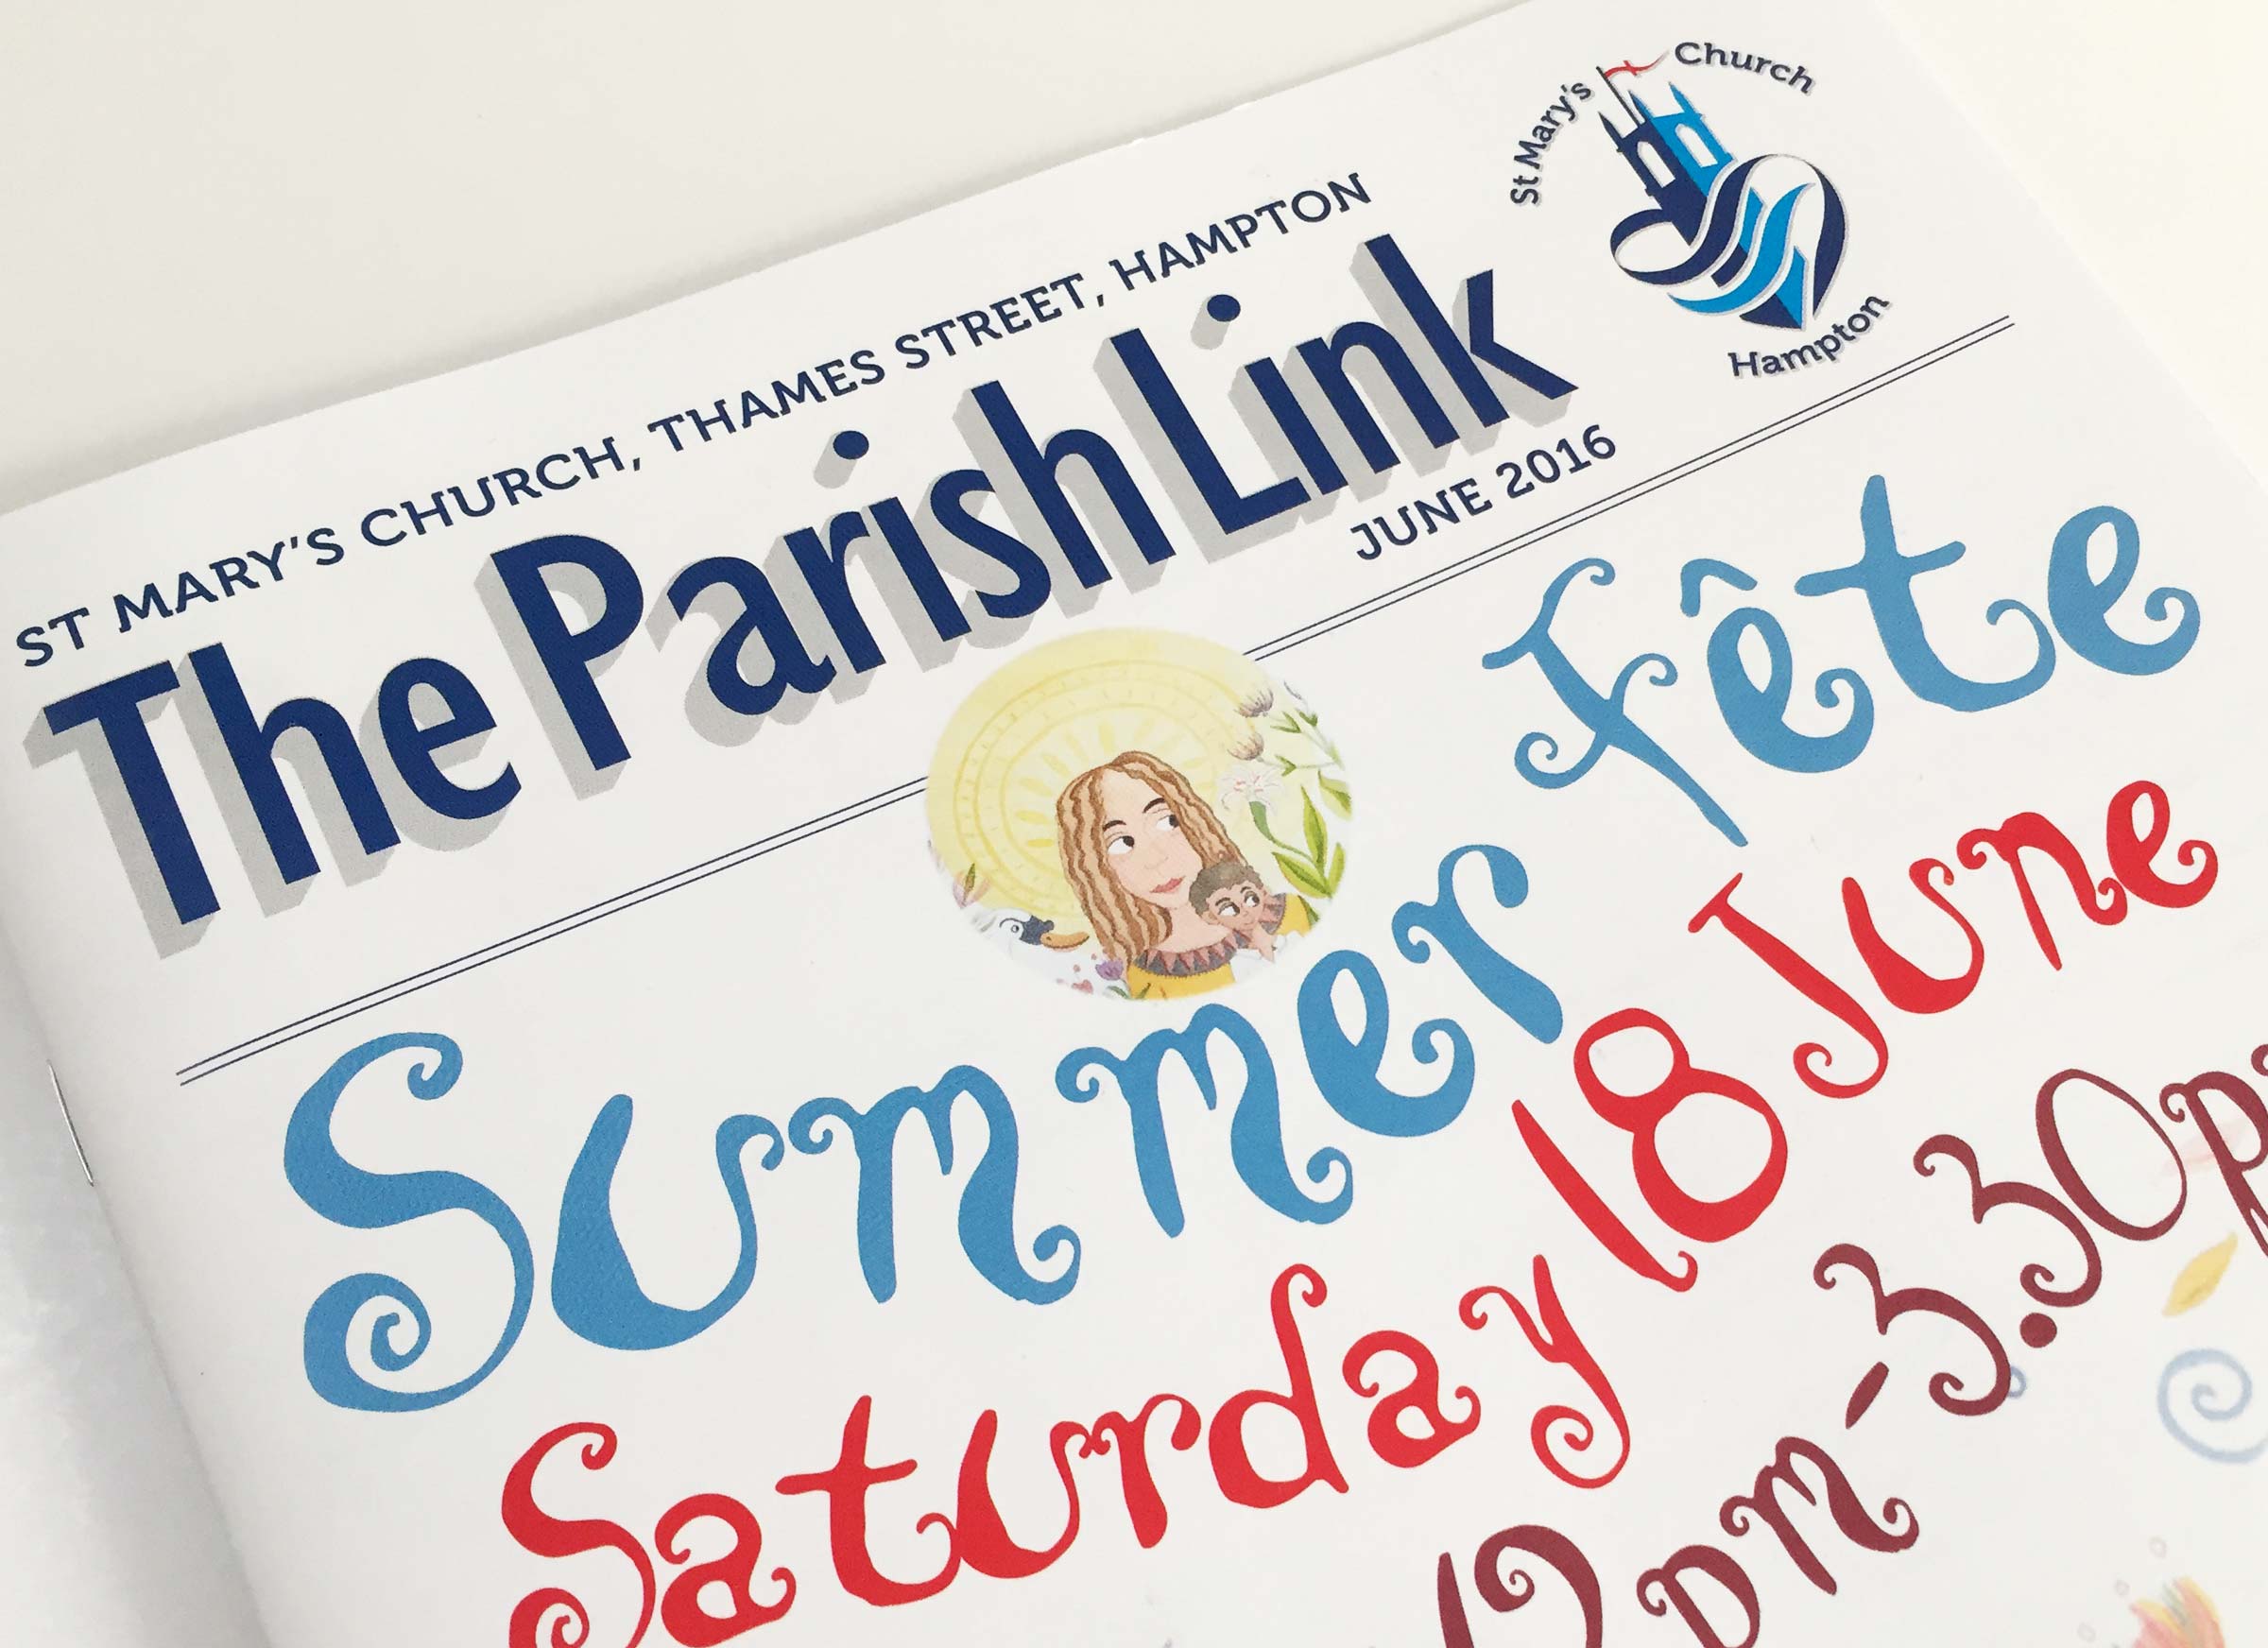 St Mary’s church logo on the Parish Link magazine (illustration by Trudi Murray)